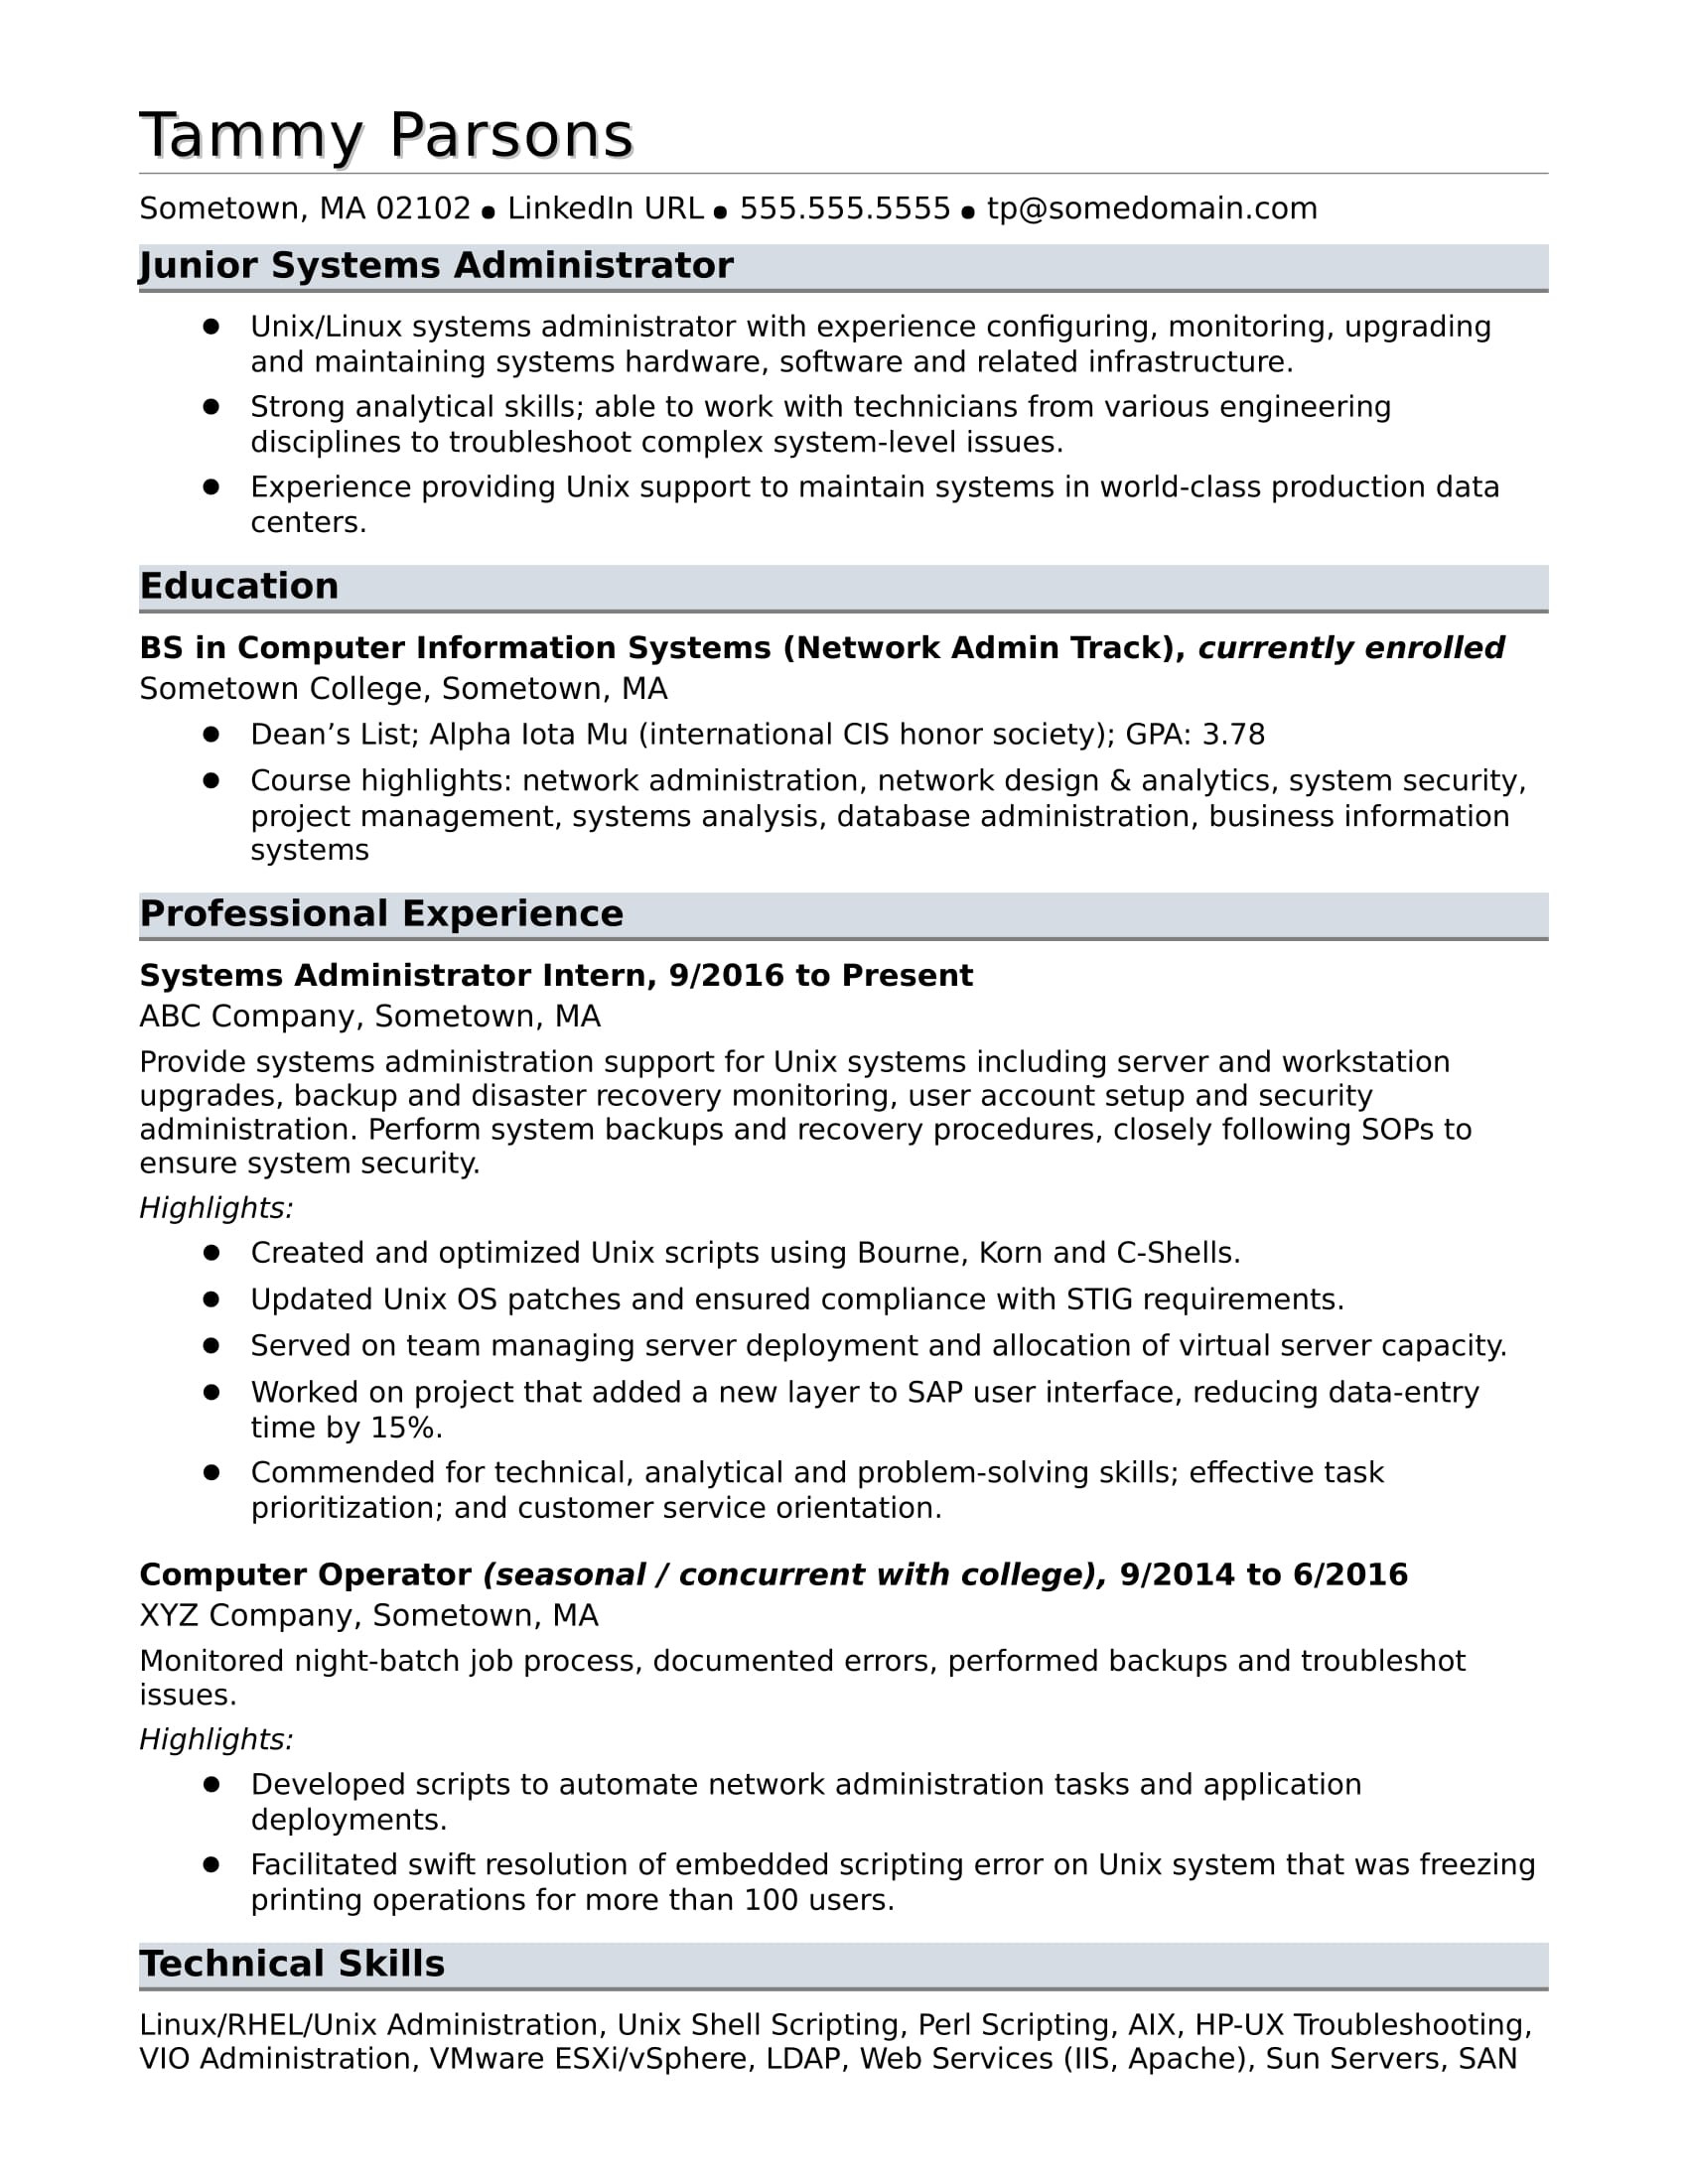 Red Hat Linux Administrator Sample Resume Sample Resume for An Entry-level Systems Administrator Monster.com